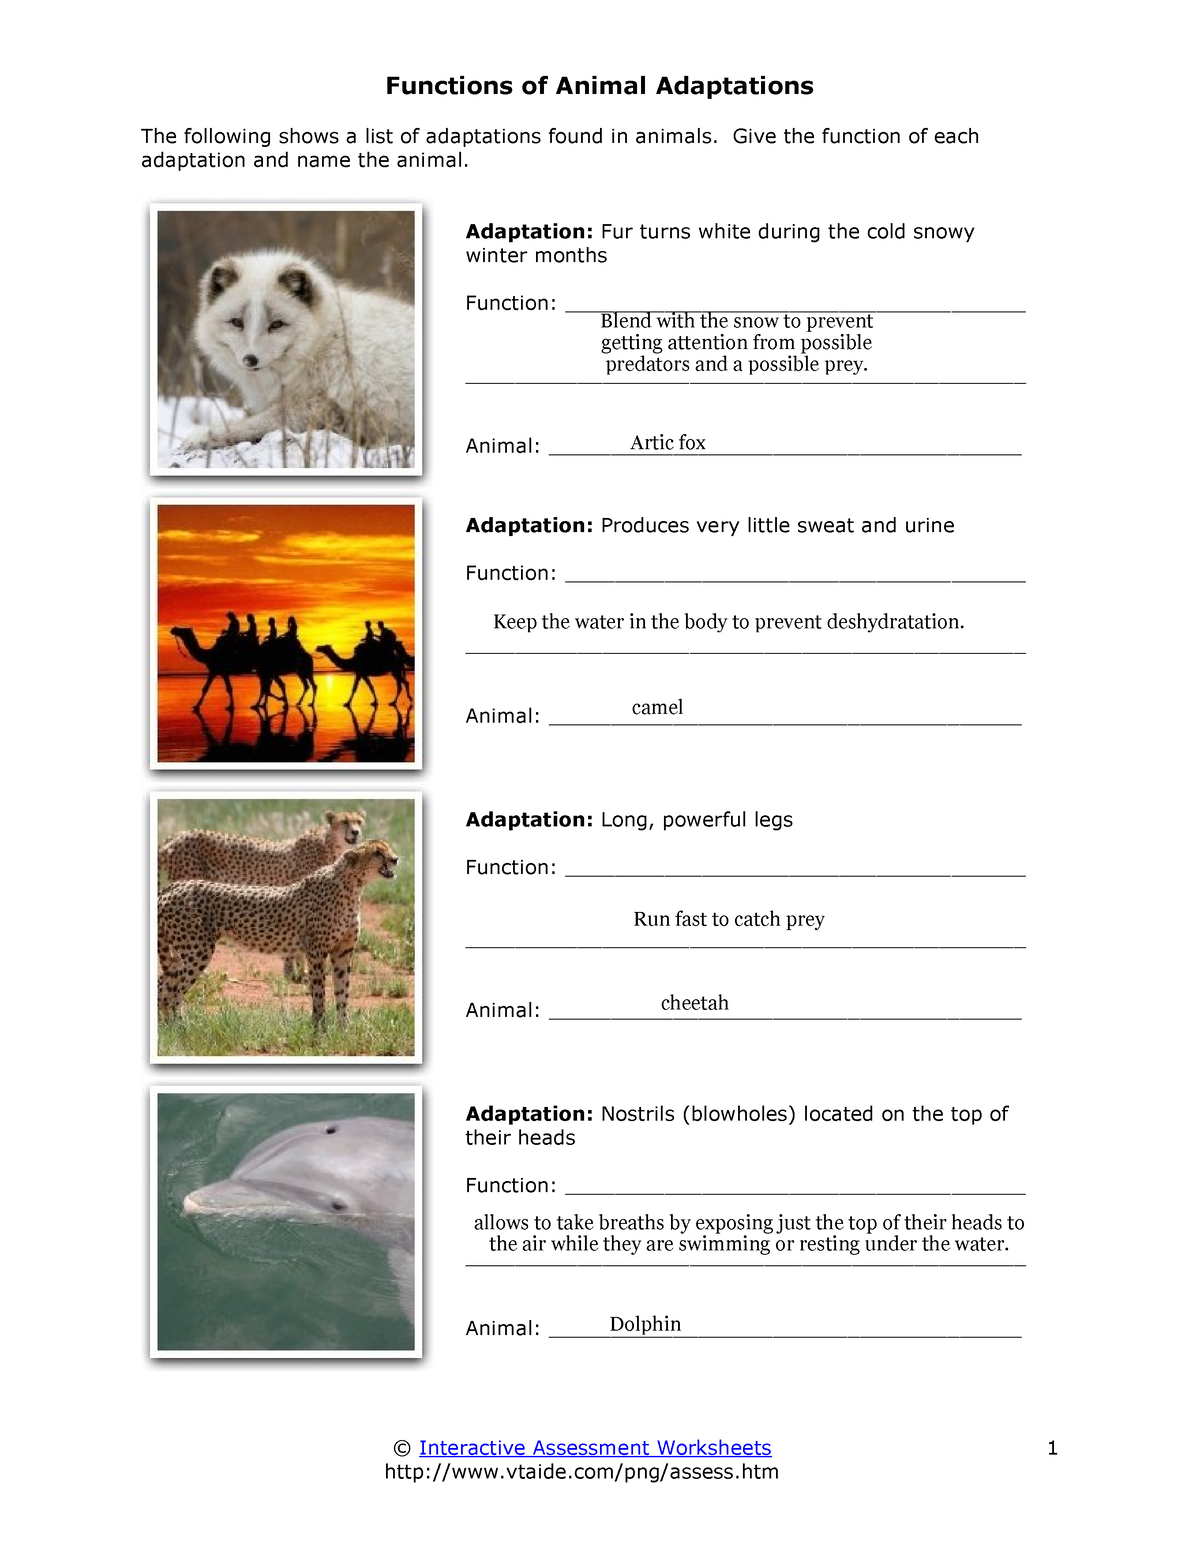 animal adaptations primary homework help